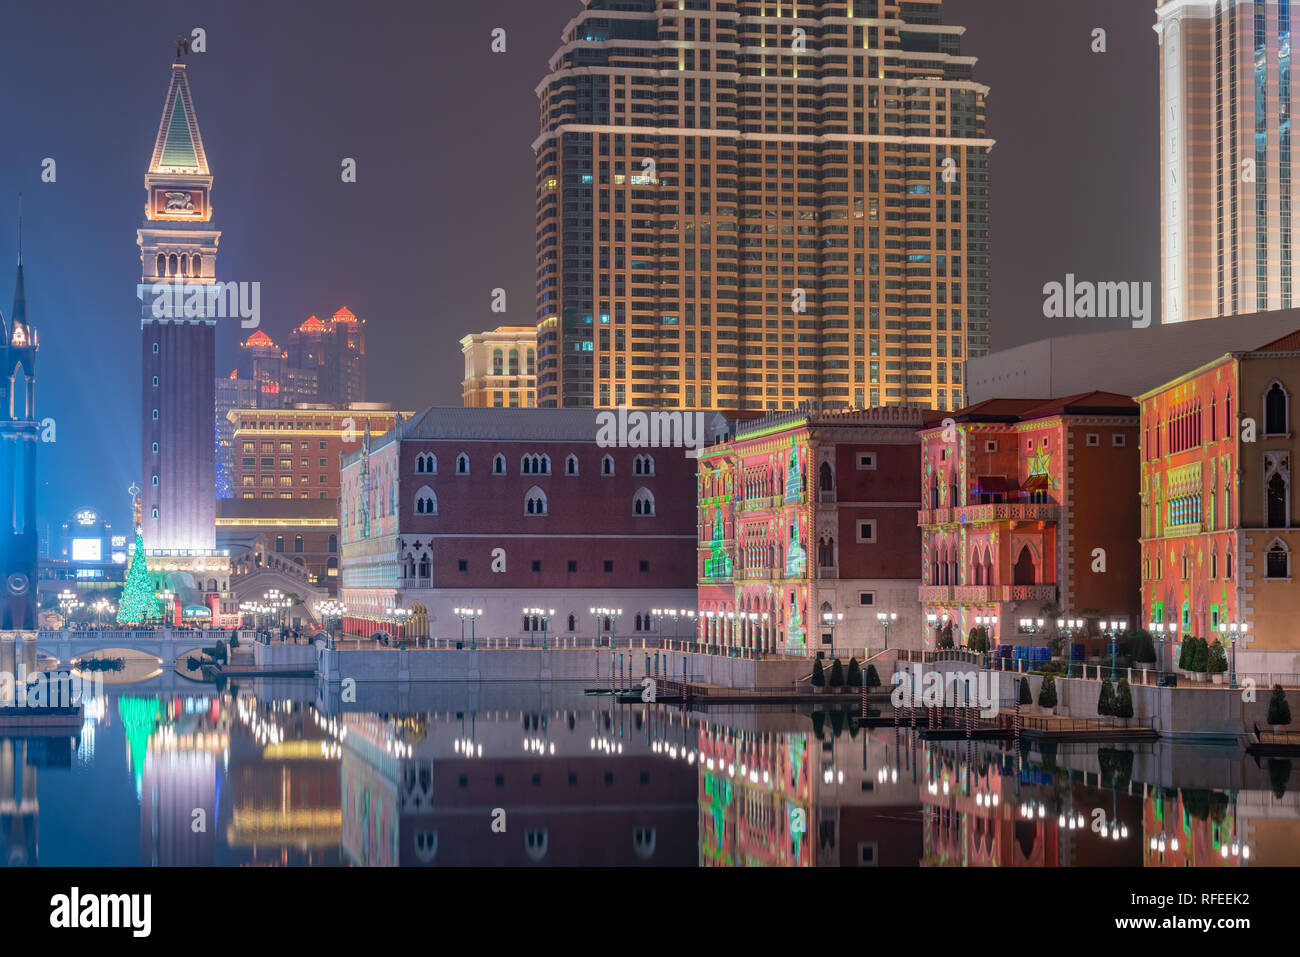 Macau, DEC 24: Night view of the famous Venetian Macao Casino with beautiful reflection on DEC 24, 2018 at Macau Stock Photo